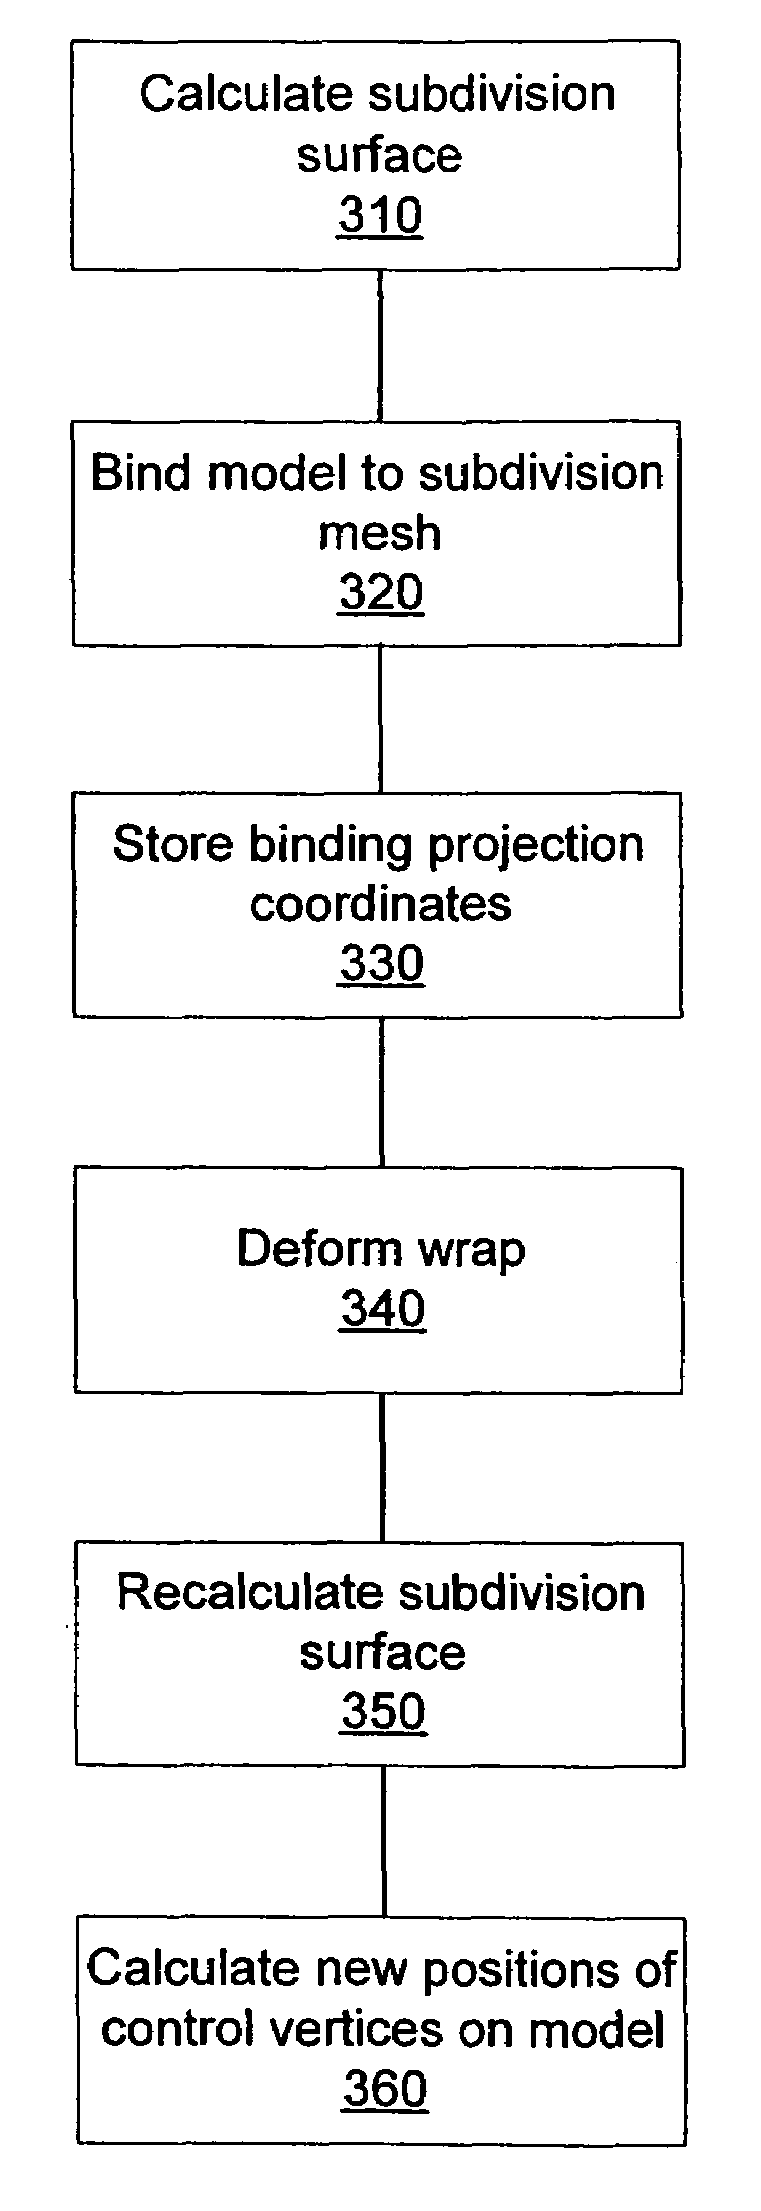 Wrap deformation using subdivision surfaces